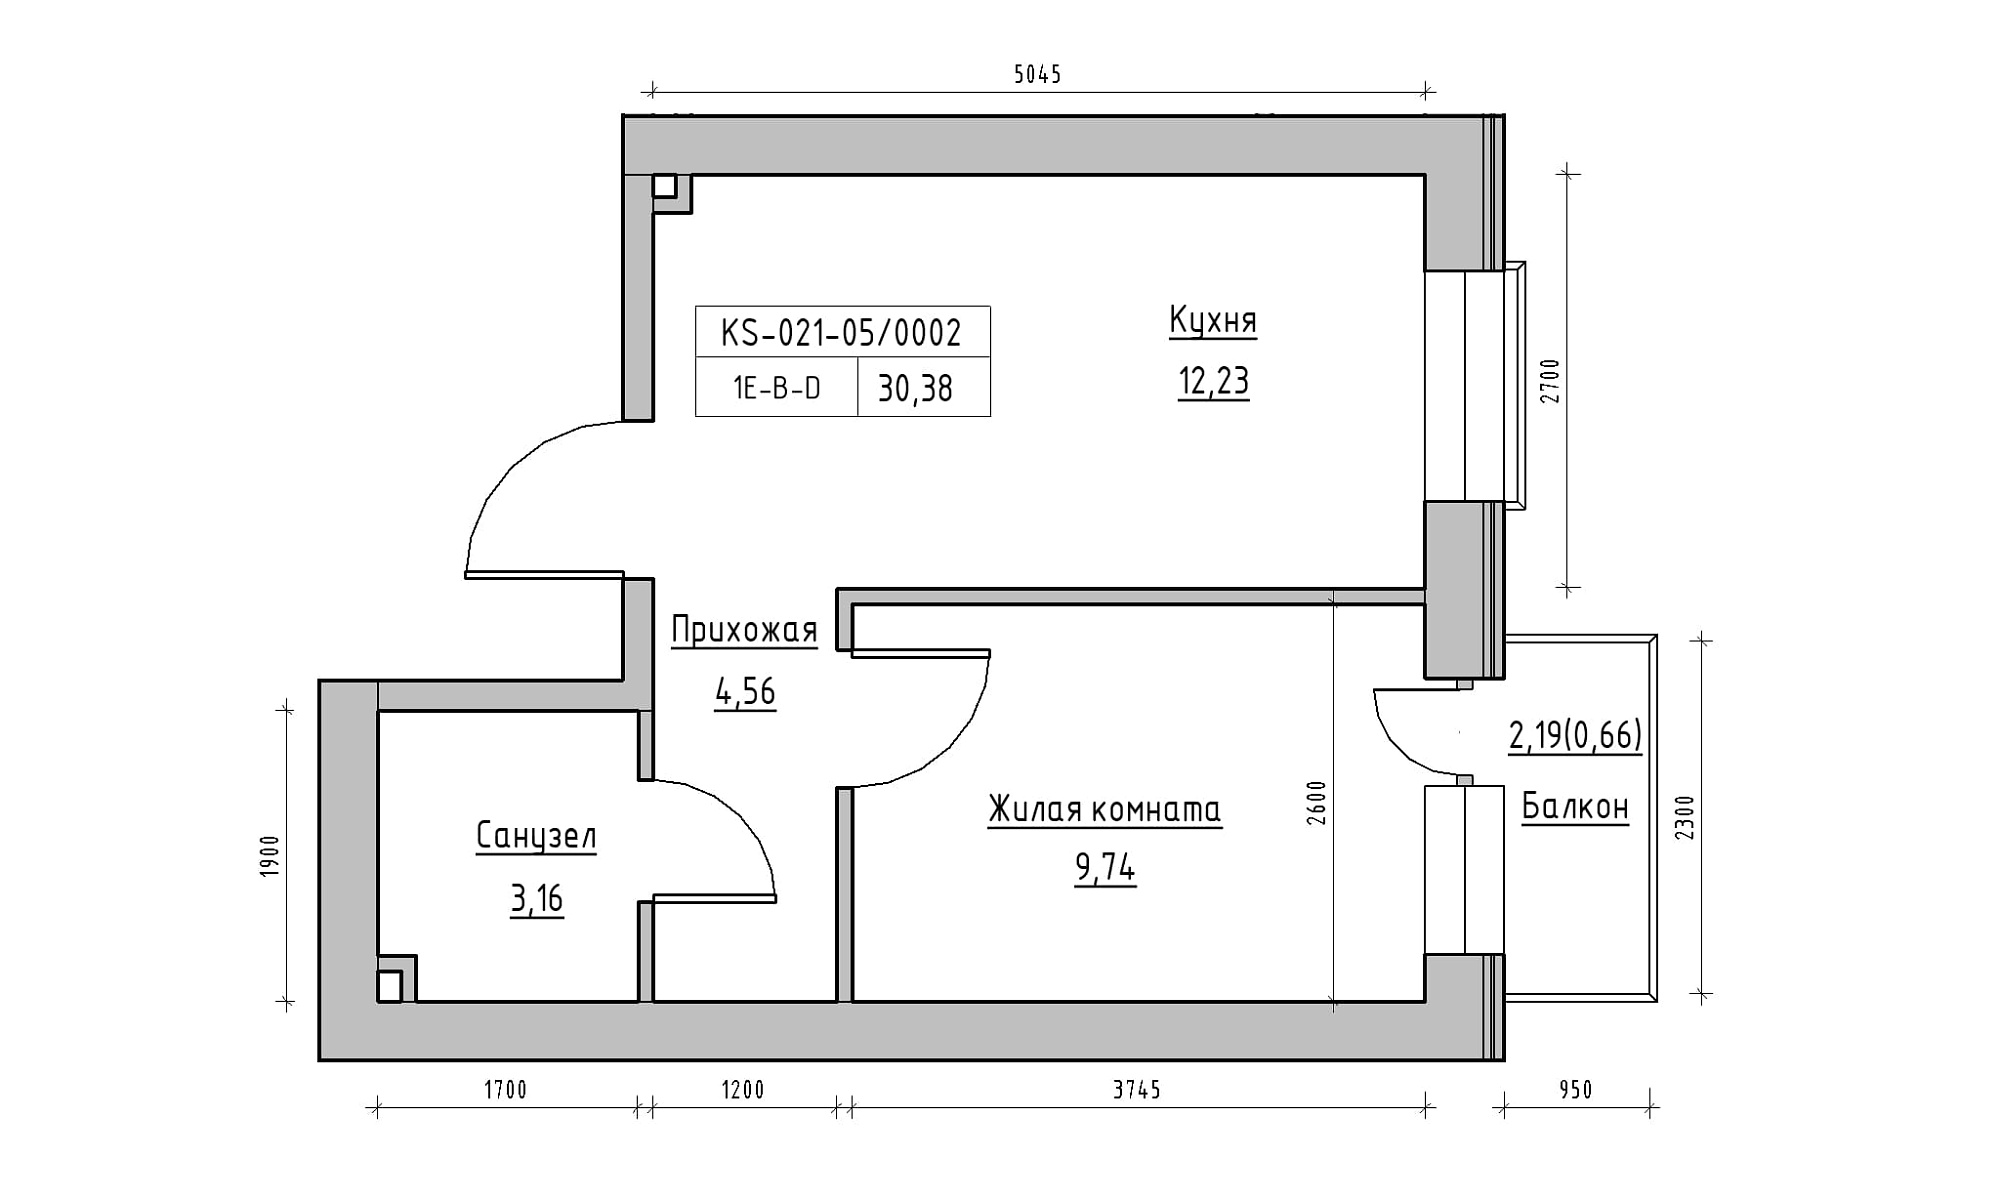 Planning 1-rm flats area 30.38m2, KS-021-05/0002.